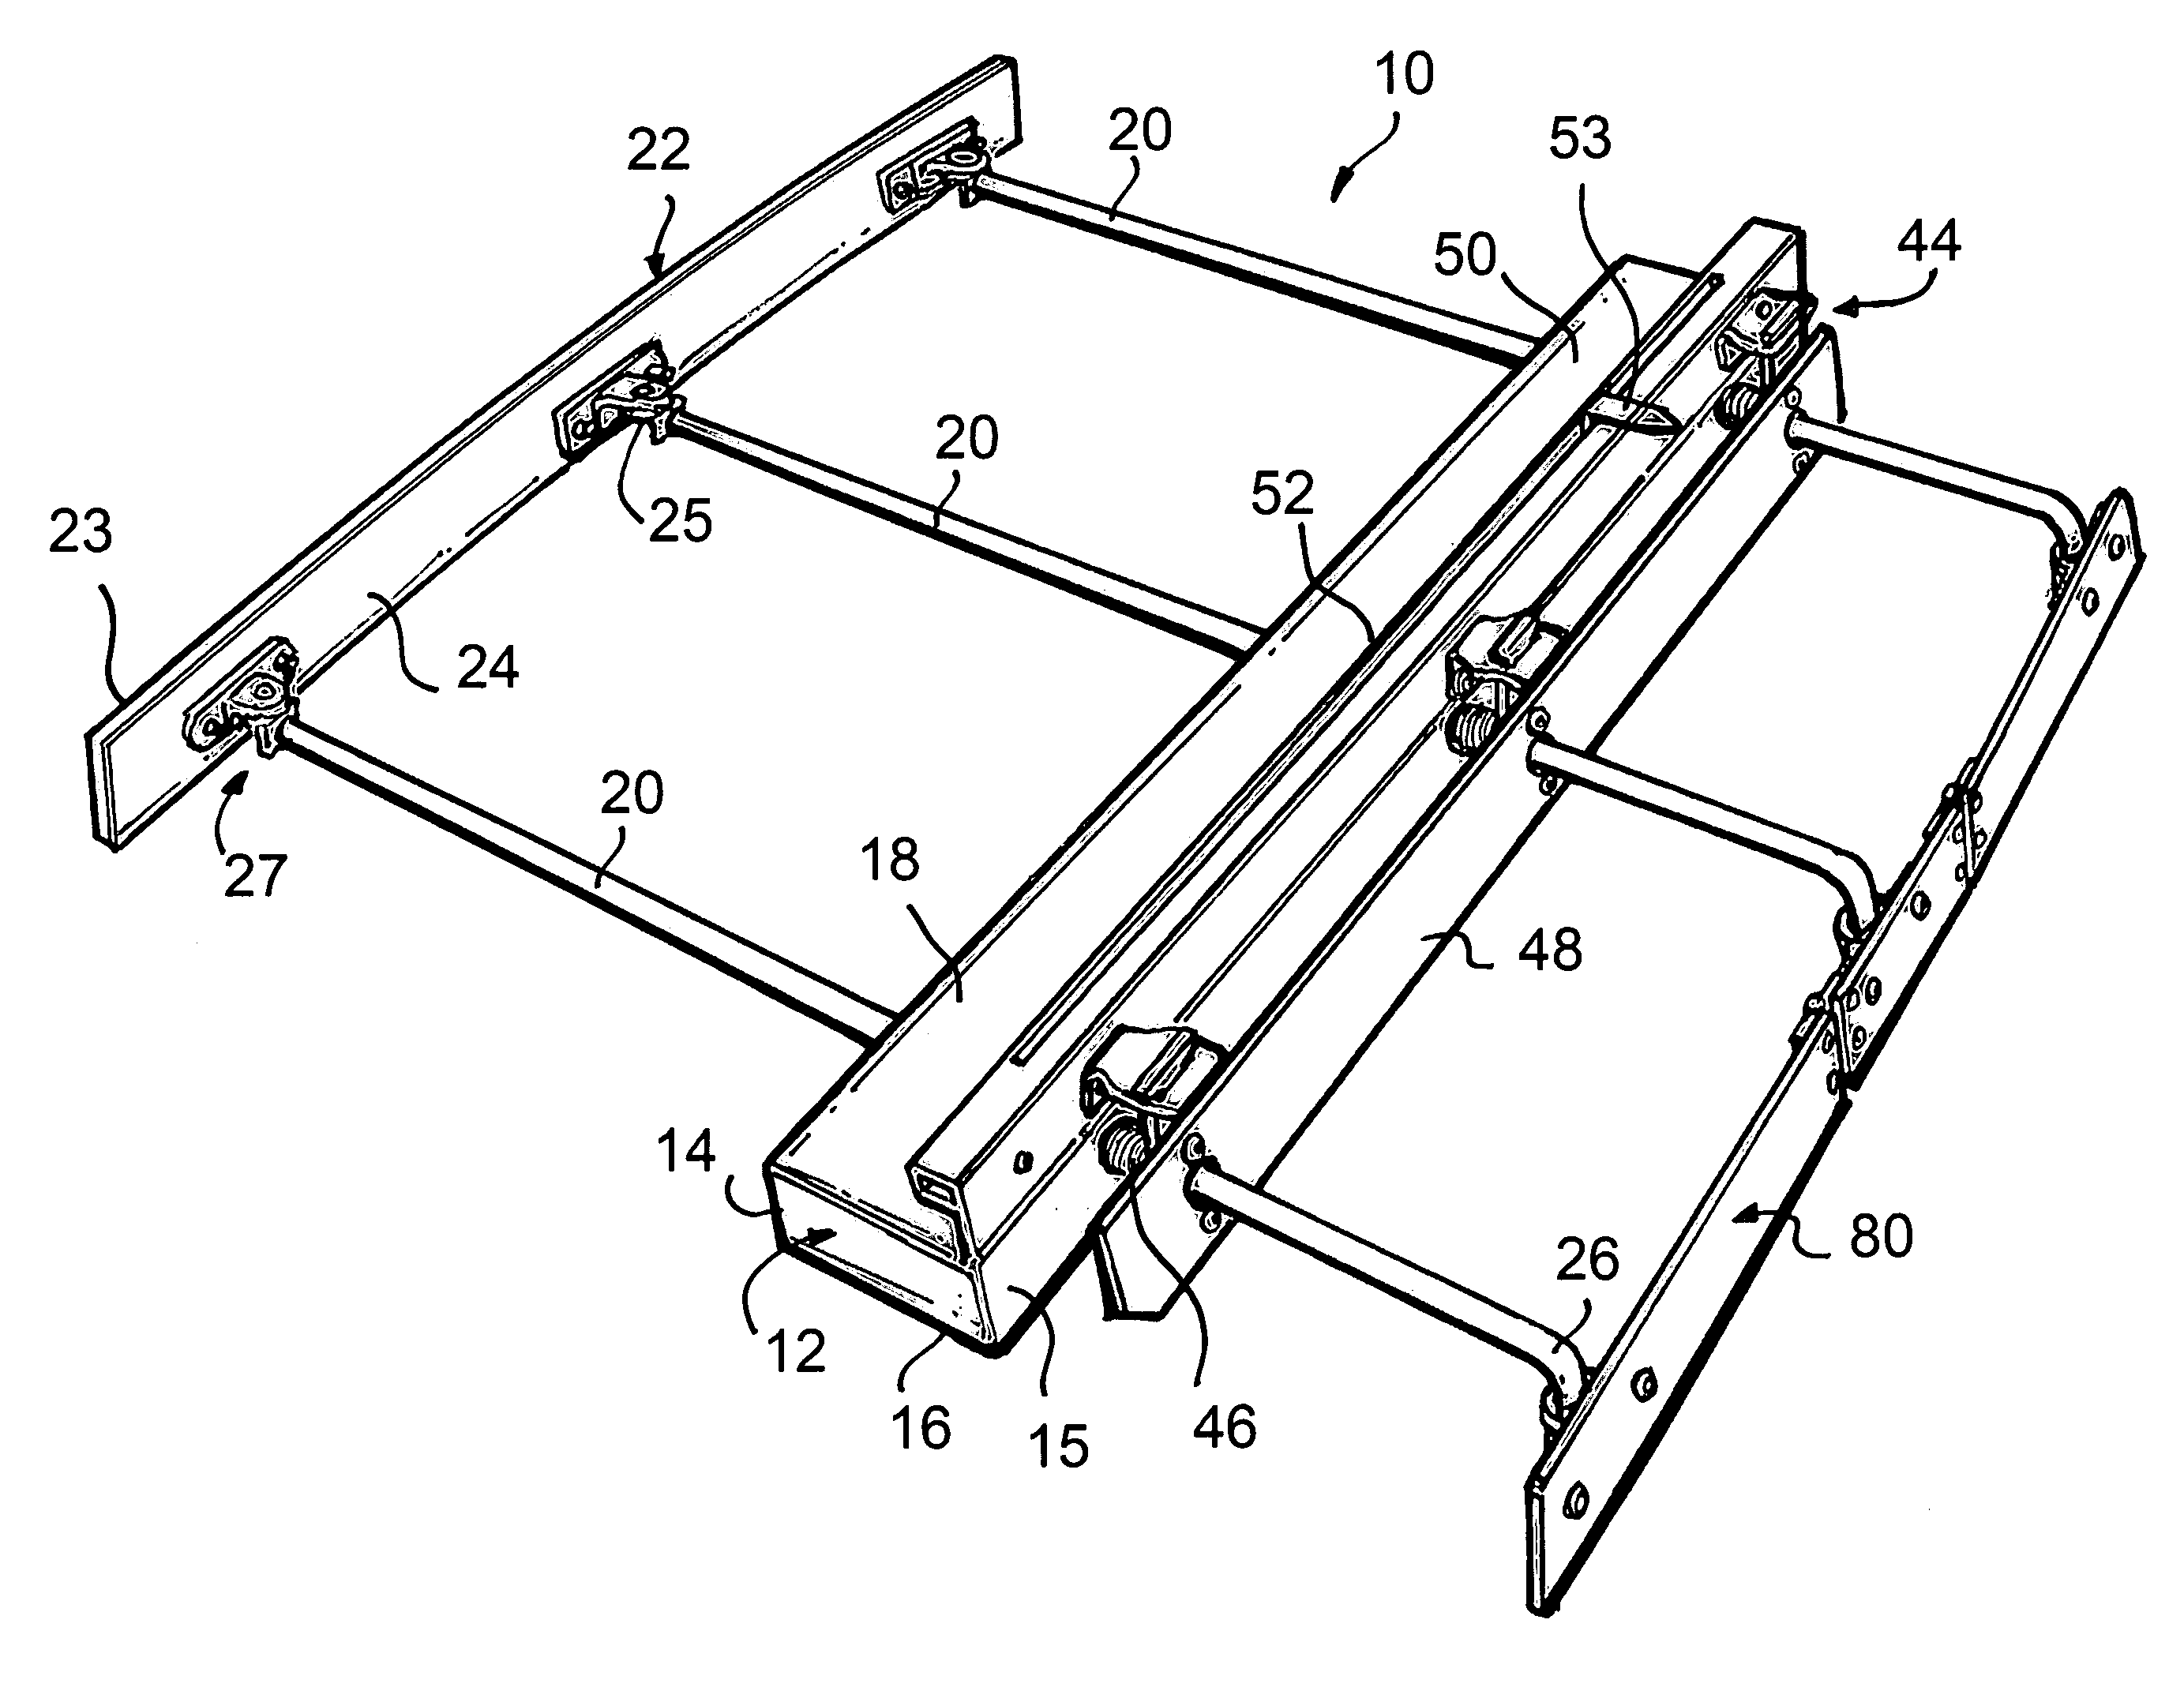 Tile measuring device